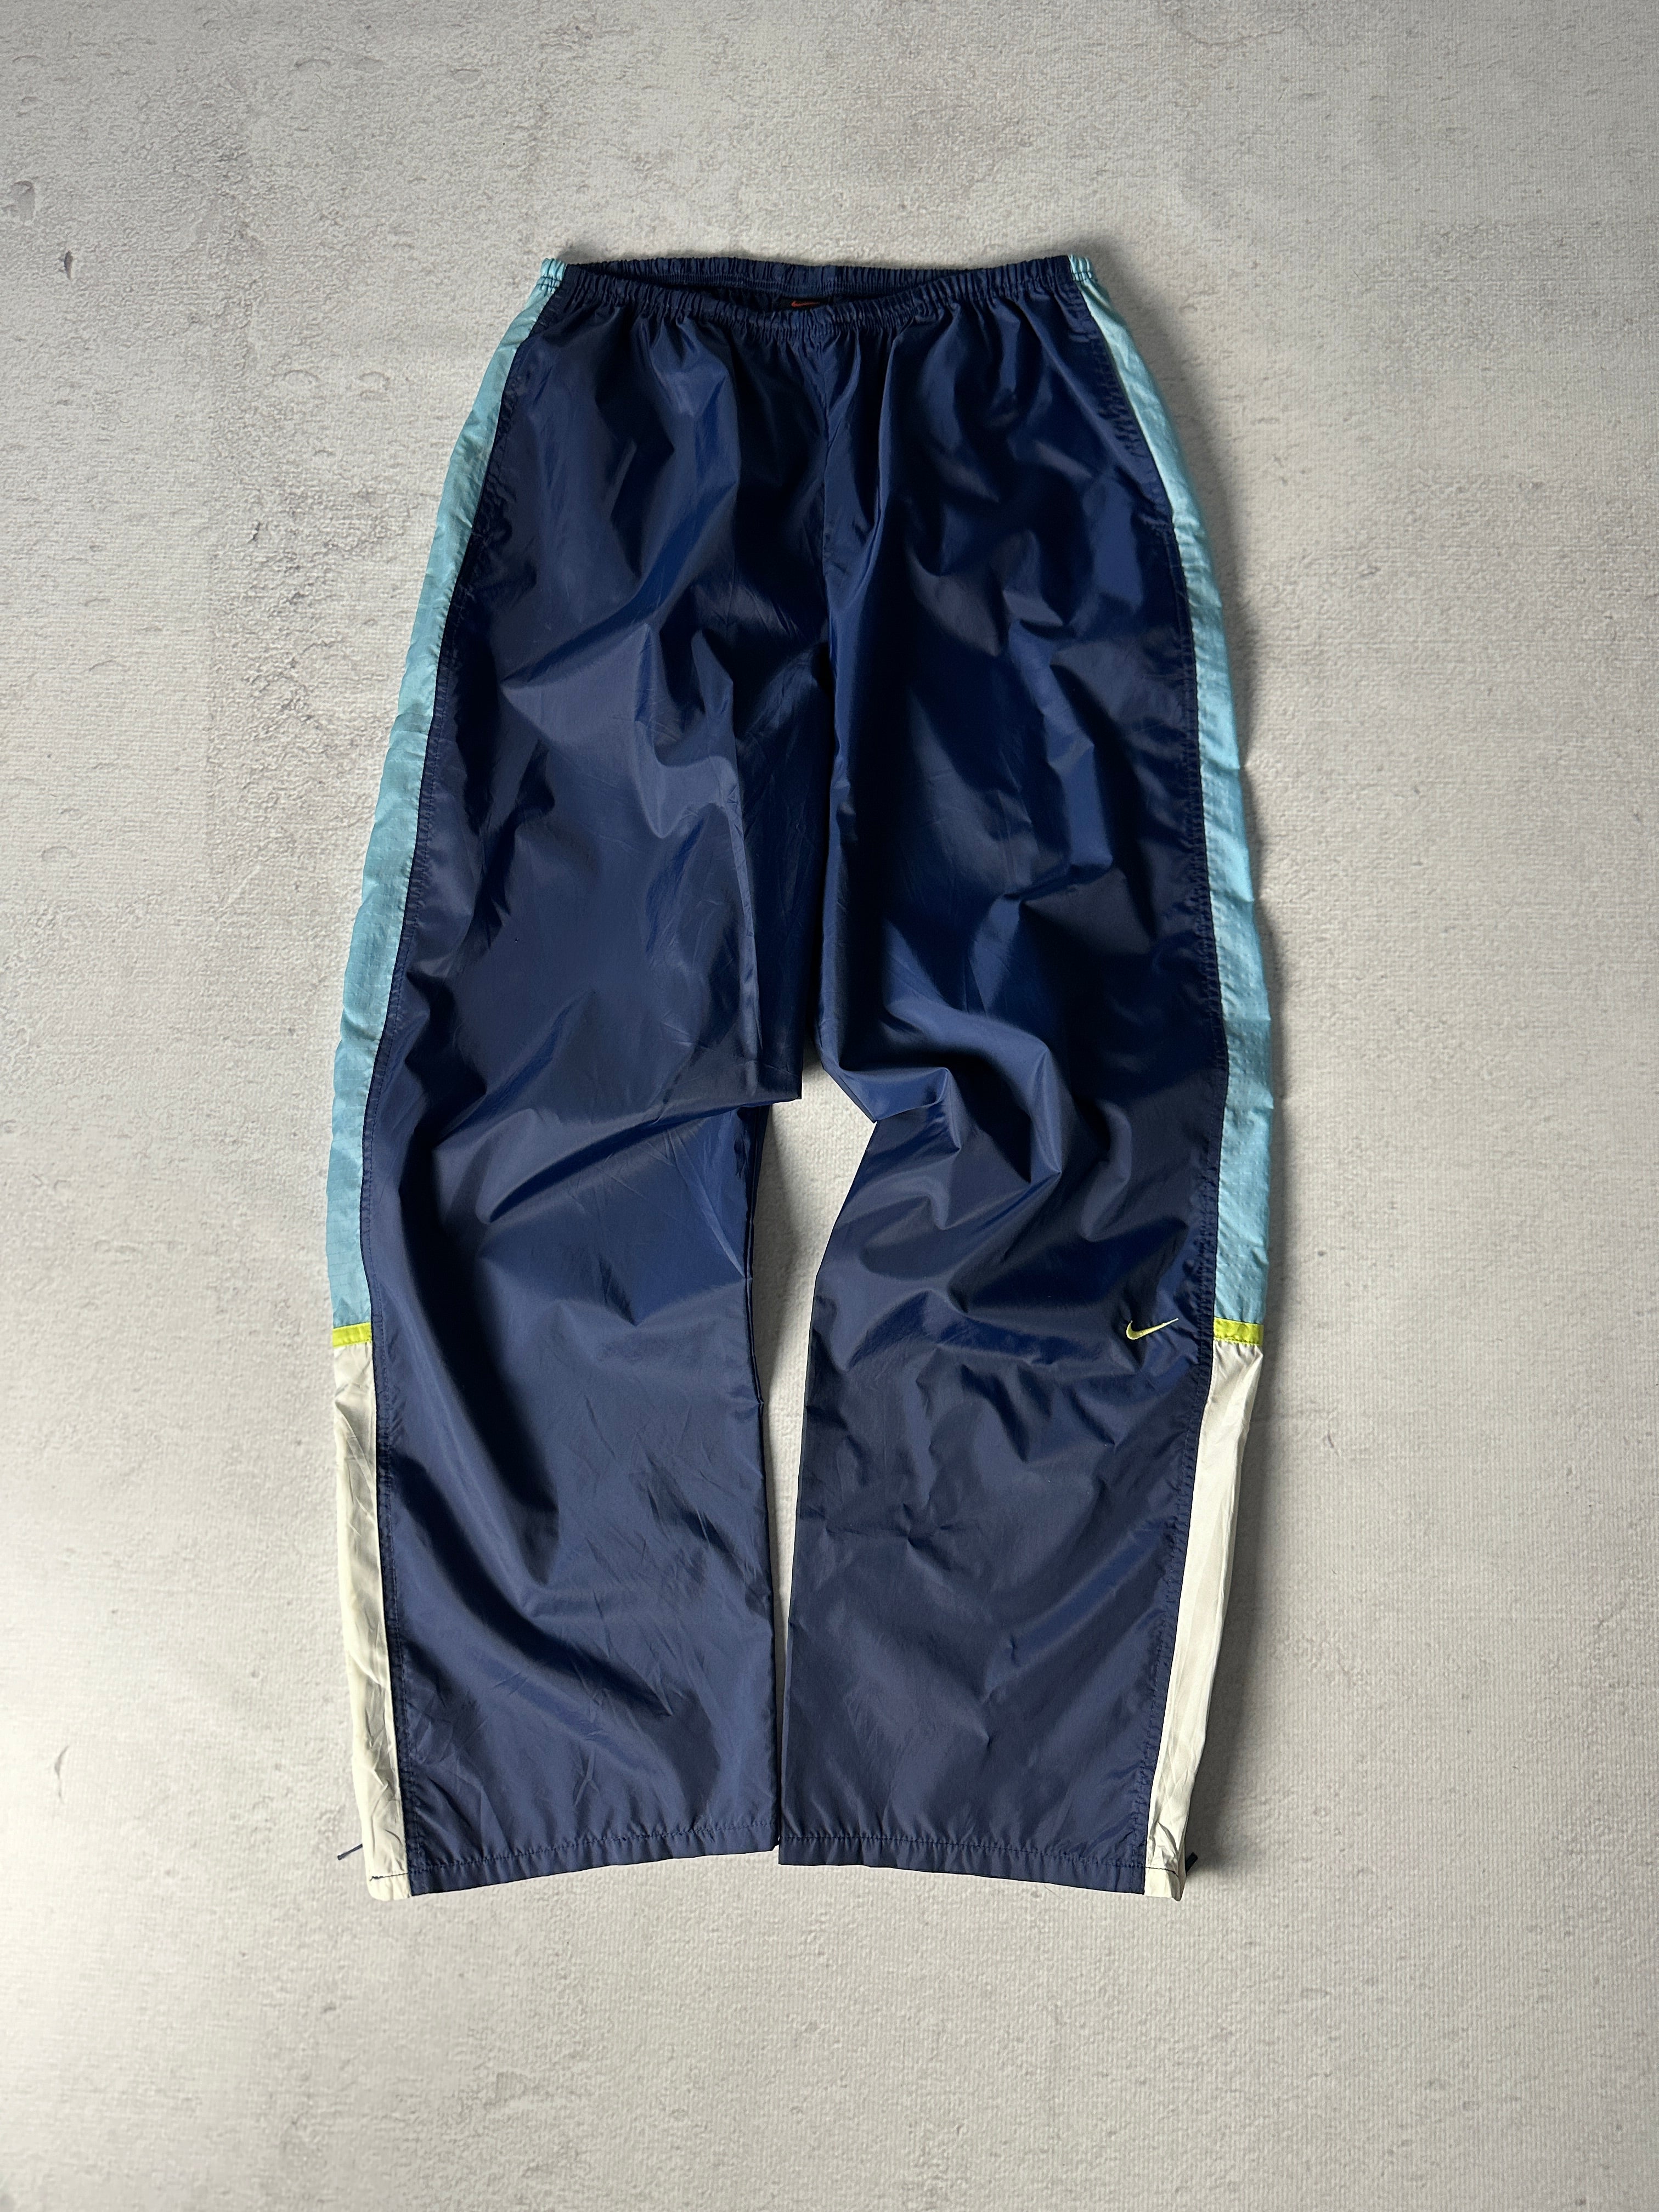 Vintage Nike Wind Track Pants - Women's XL